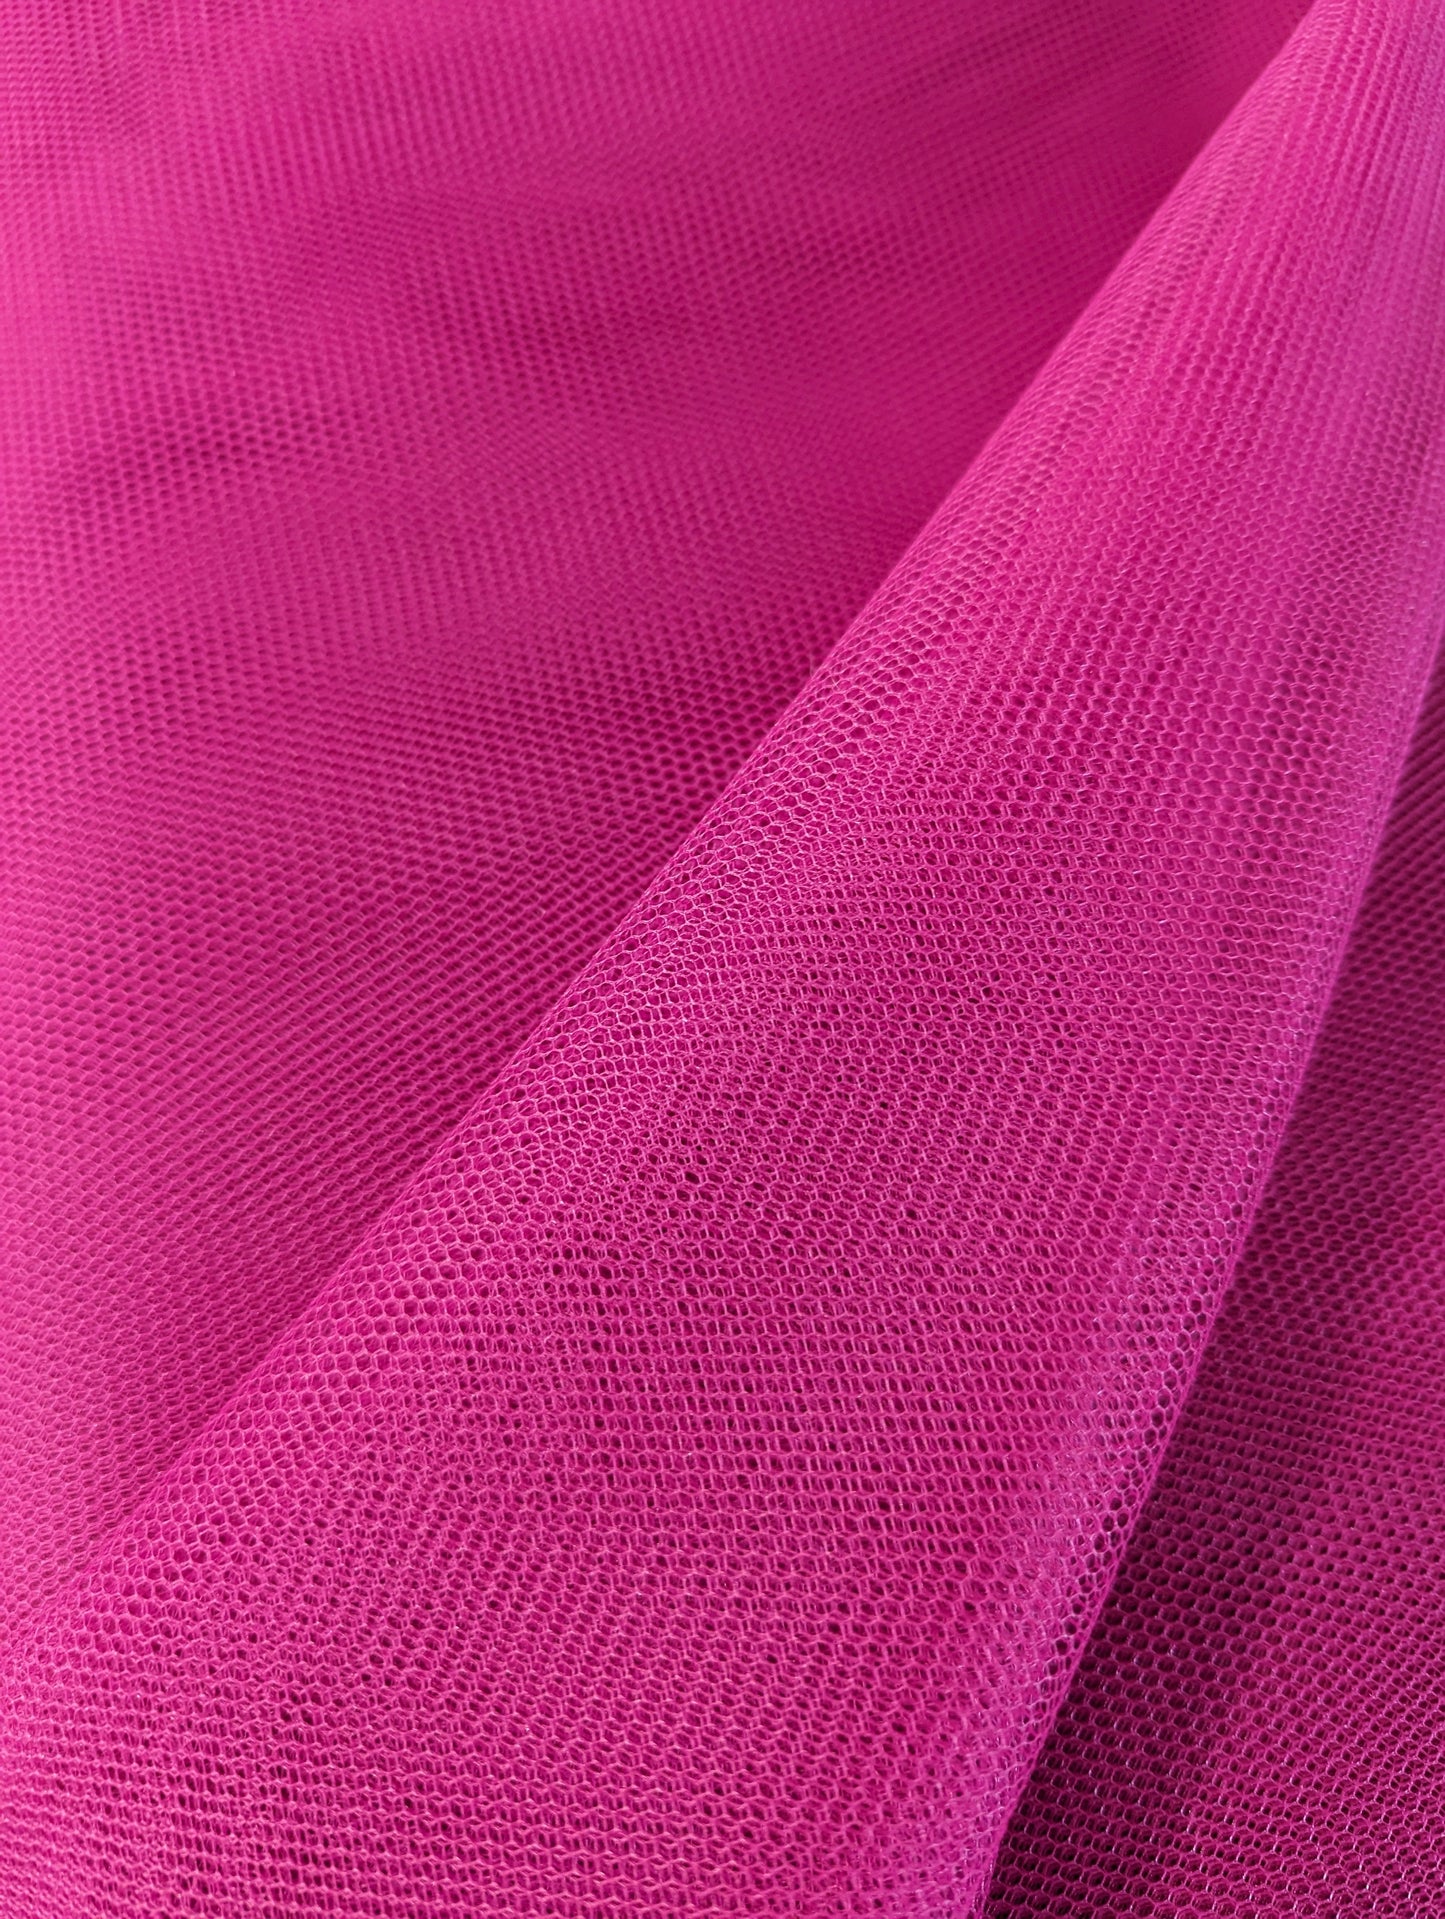 Nylon Tutu Net - Hot Pink - Dazzle Me Dancewear